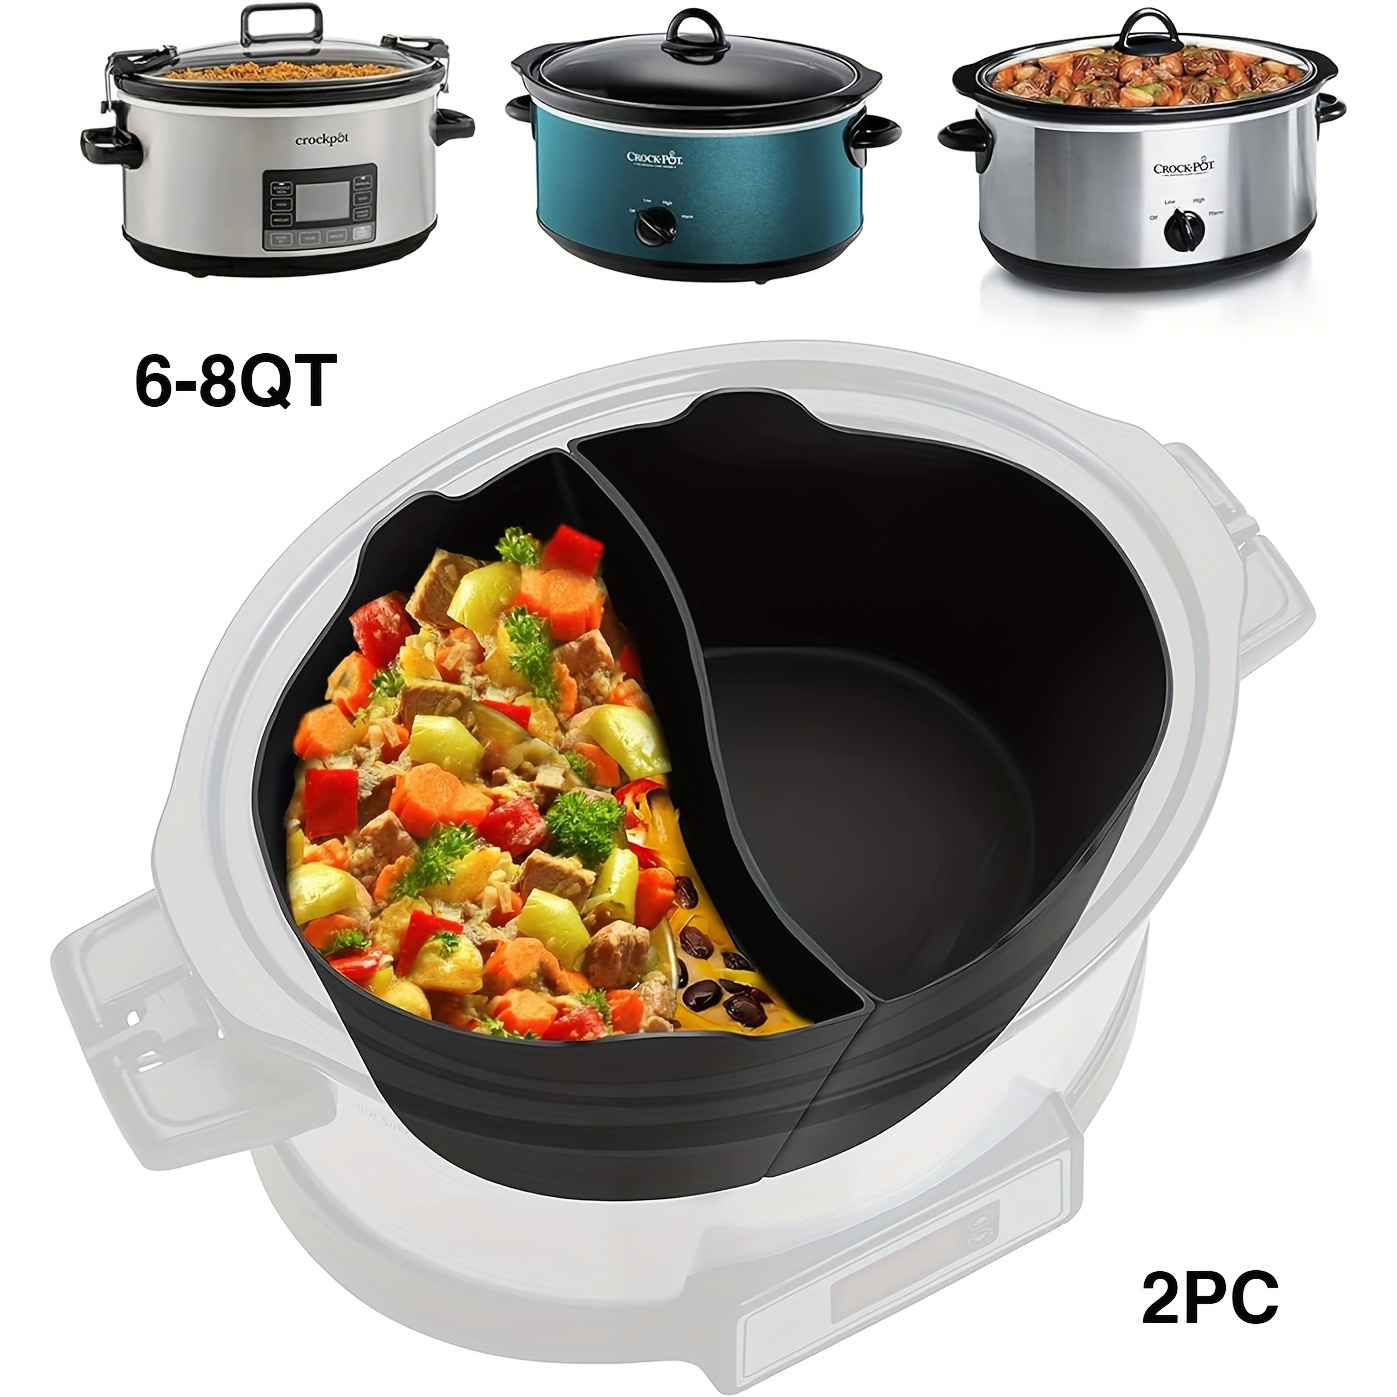 Magikichen 6 Quart Oval Silicone Slow Cooker Liners,For Crockpot  Liners,Reusable Crock pot Divider Insert,BPA-Free, Dishwasher Safe